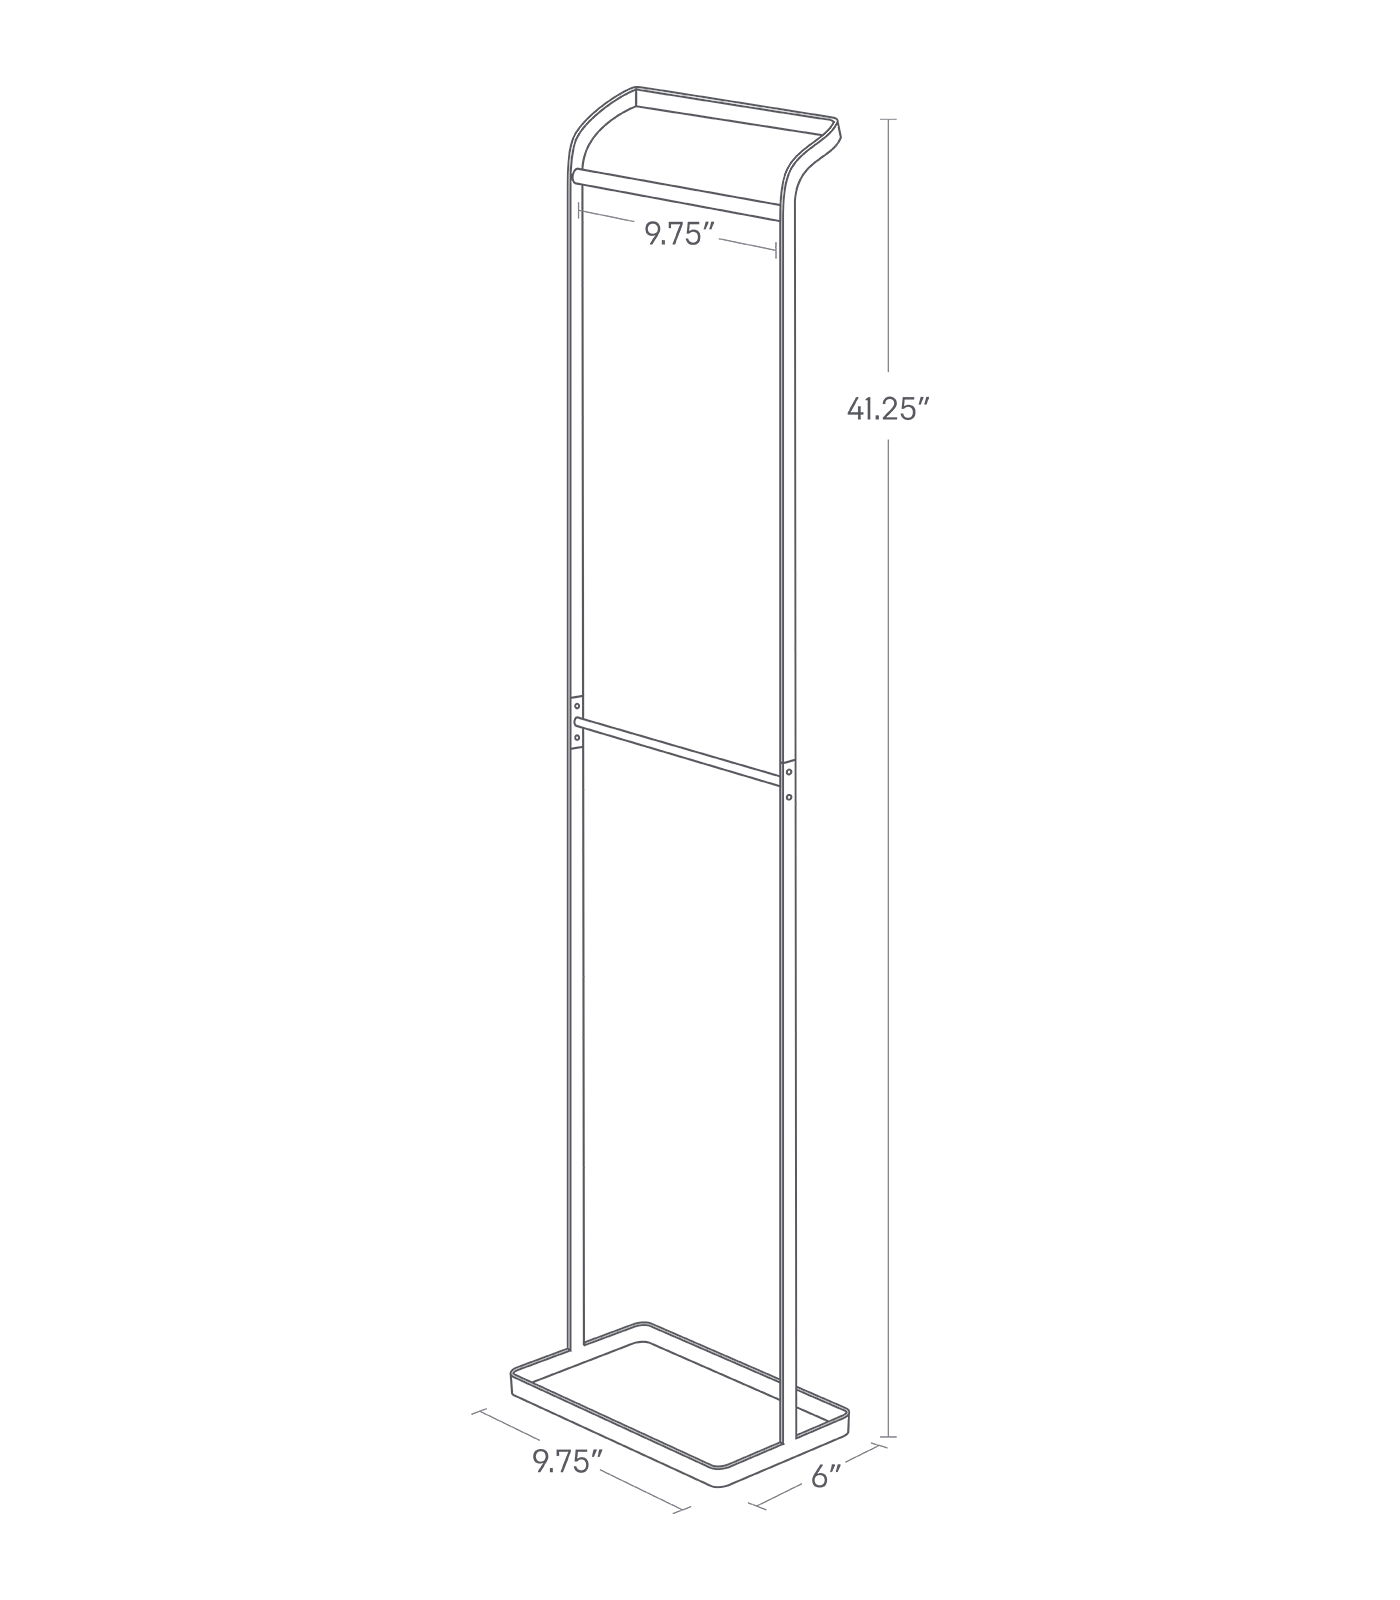 Dimension image for Hanging Umbrella Holder showing a length of 9.75